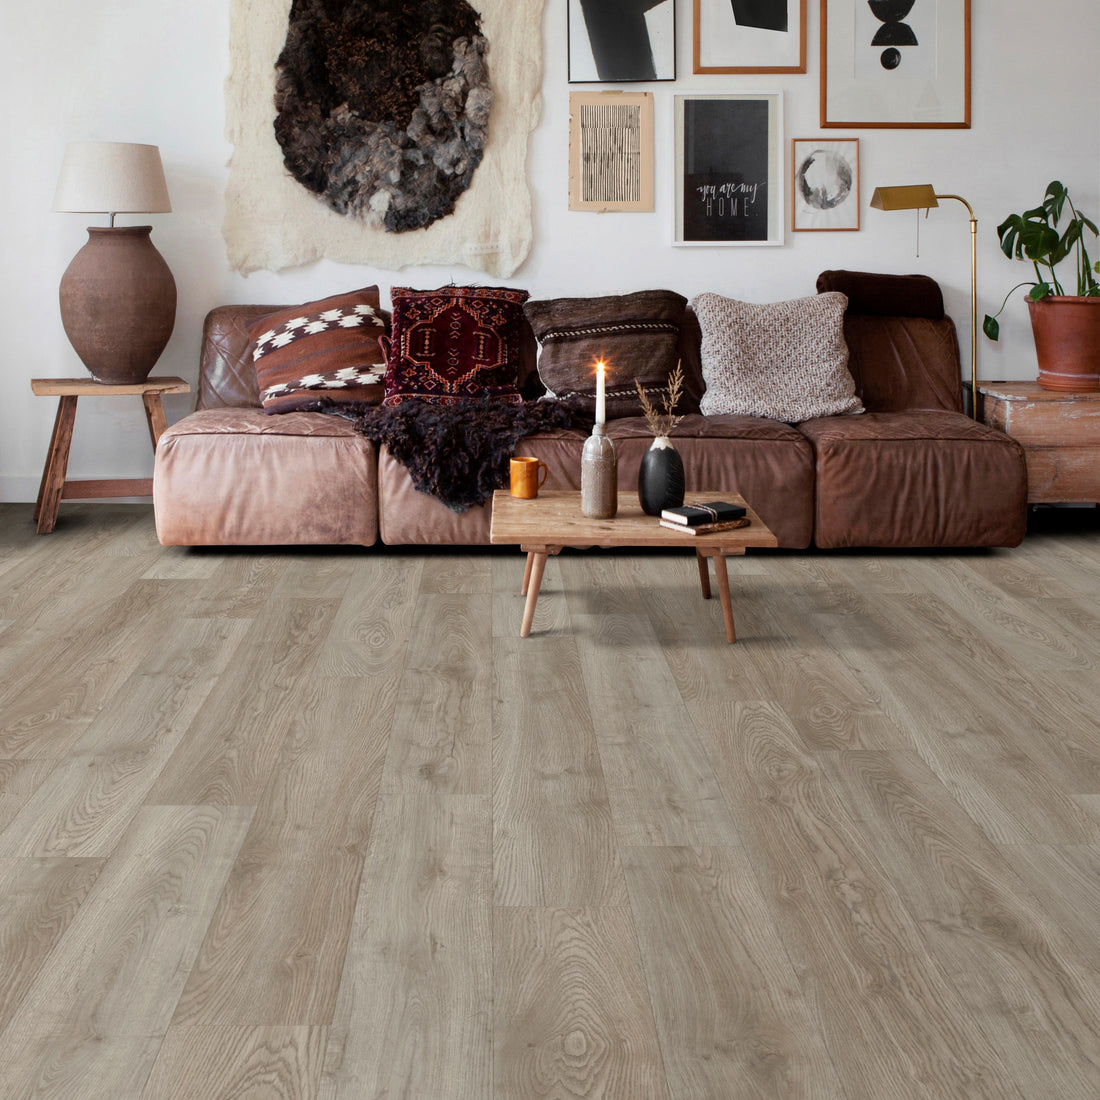 Kompact KlickFloor - Shingle Oak vinyl living room flooring with furniture 04870